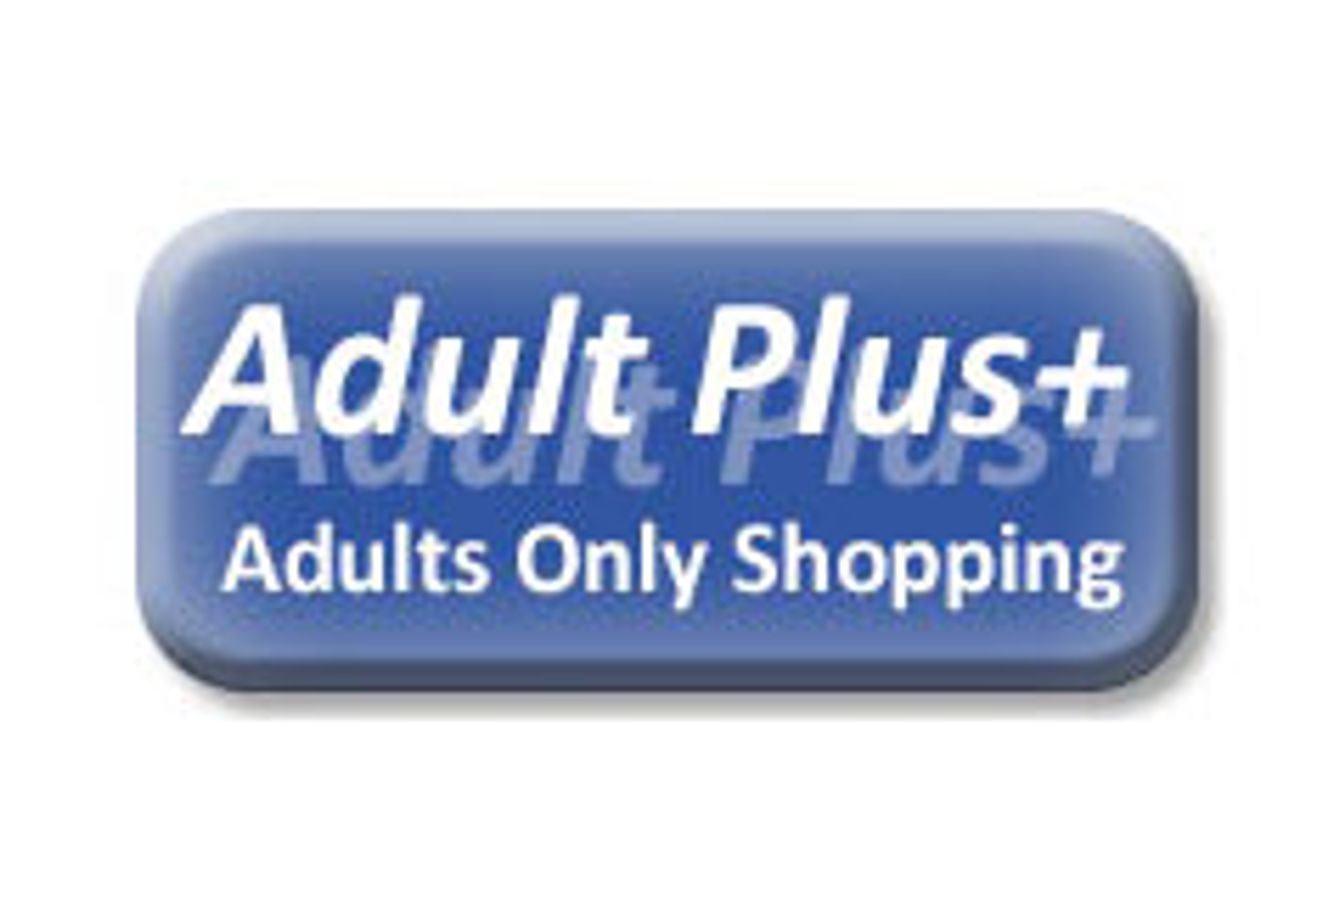 Adult Plus+